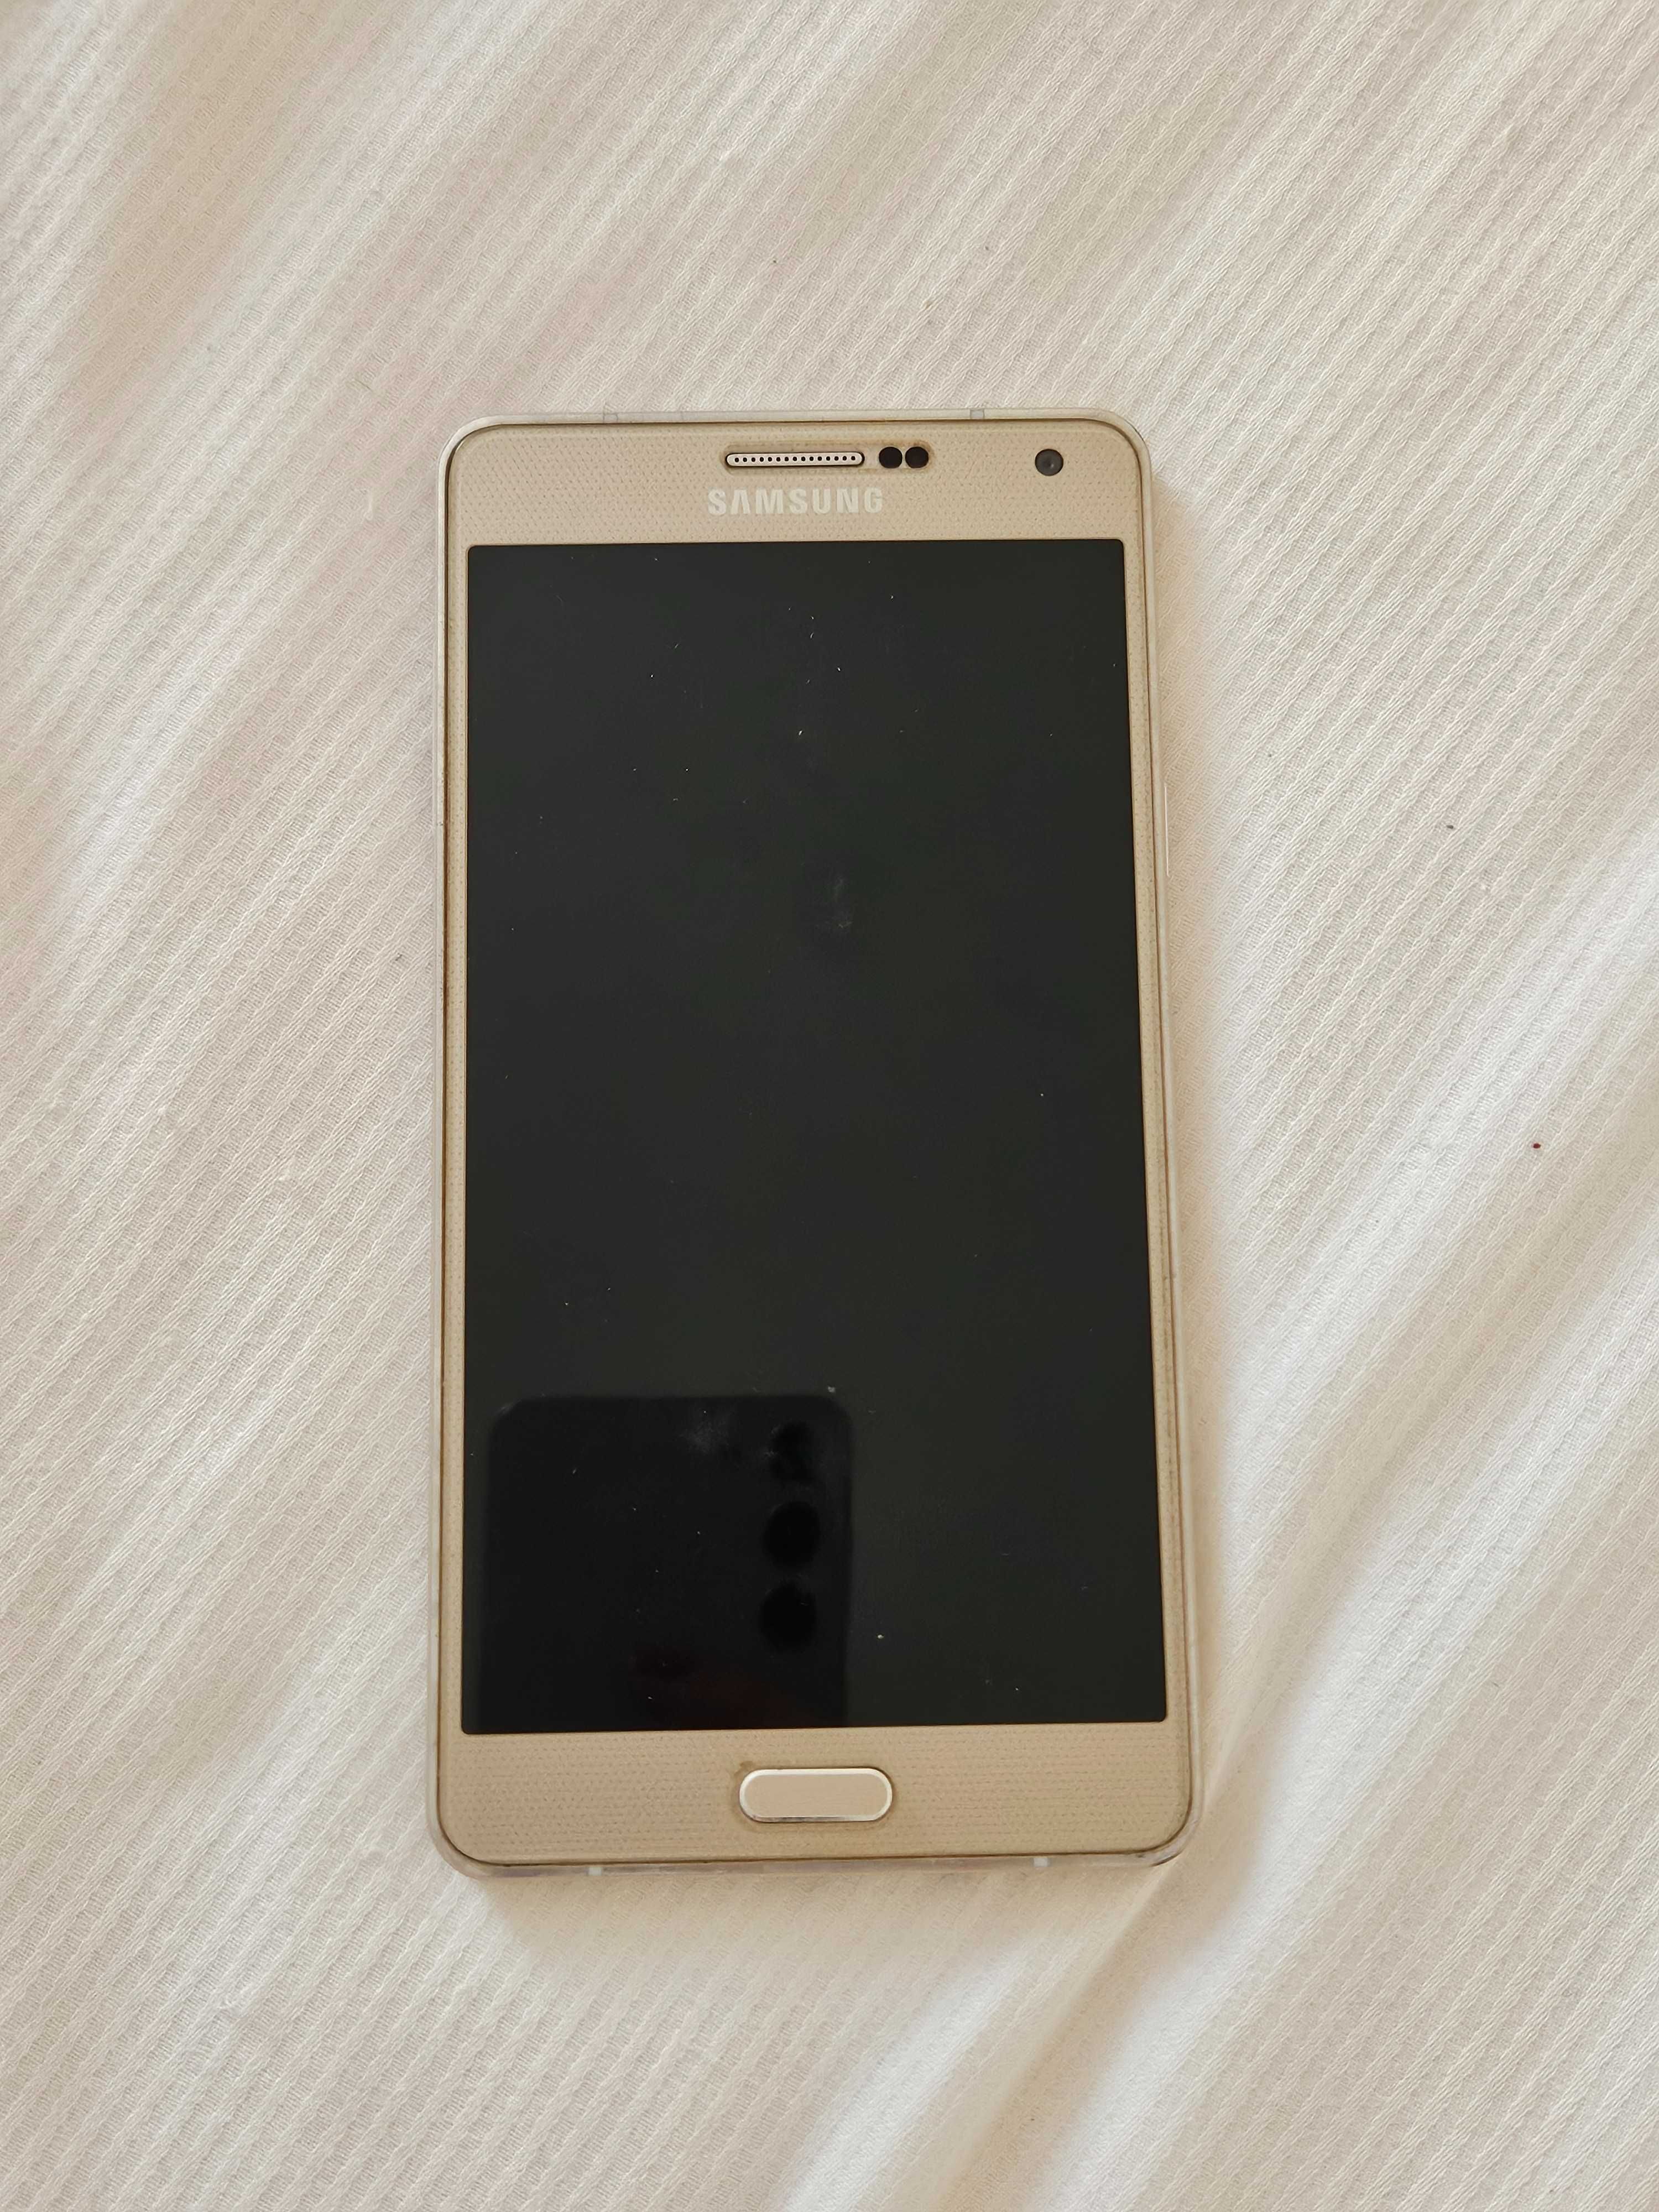 Samsung Galaxy A7 gold, capas de oferta